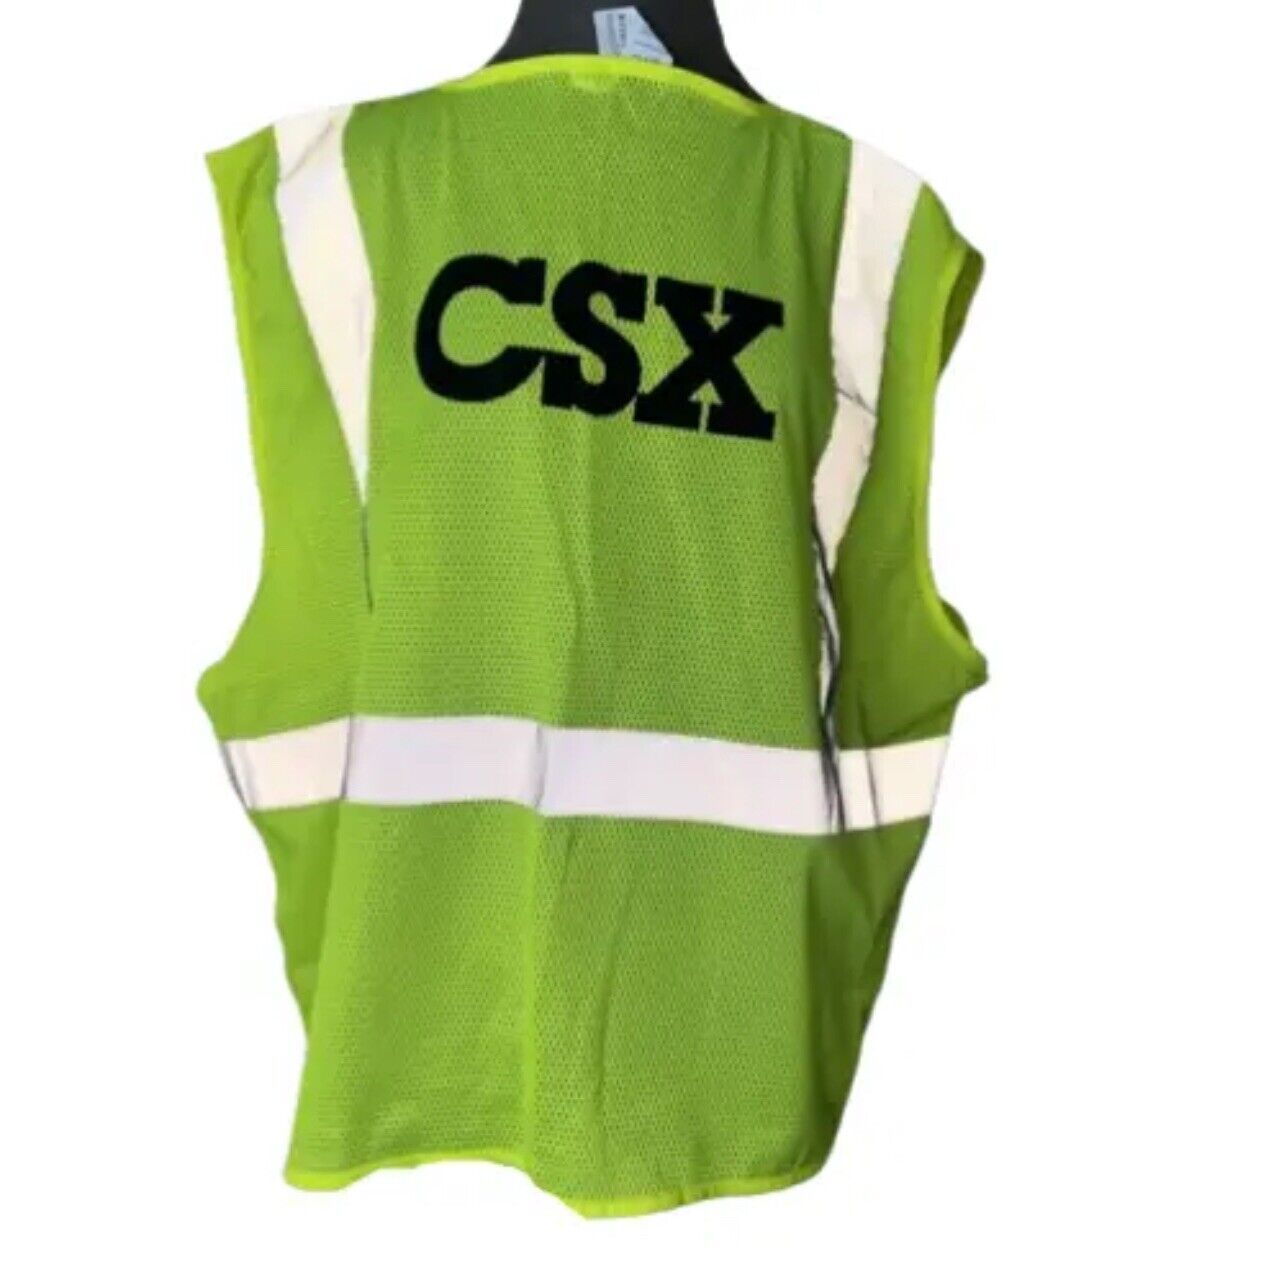 CSX Neon Hi-Res Safety  Neon Yellow Rail Train Tee Vest Railroad Train XL-2XL